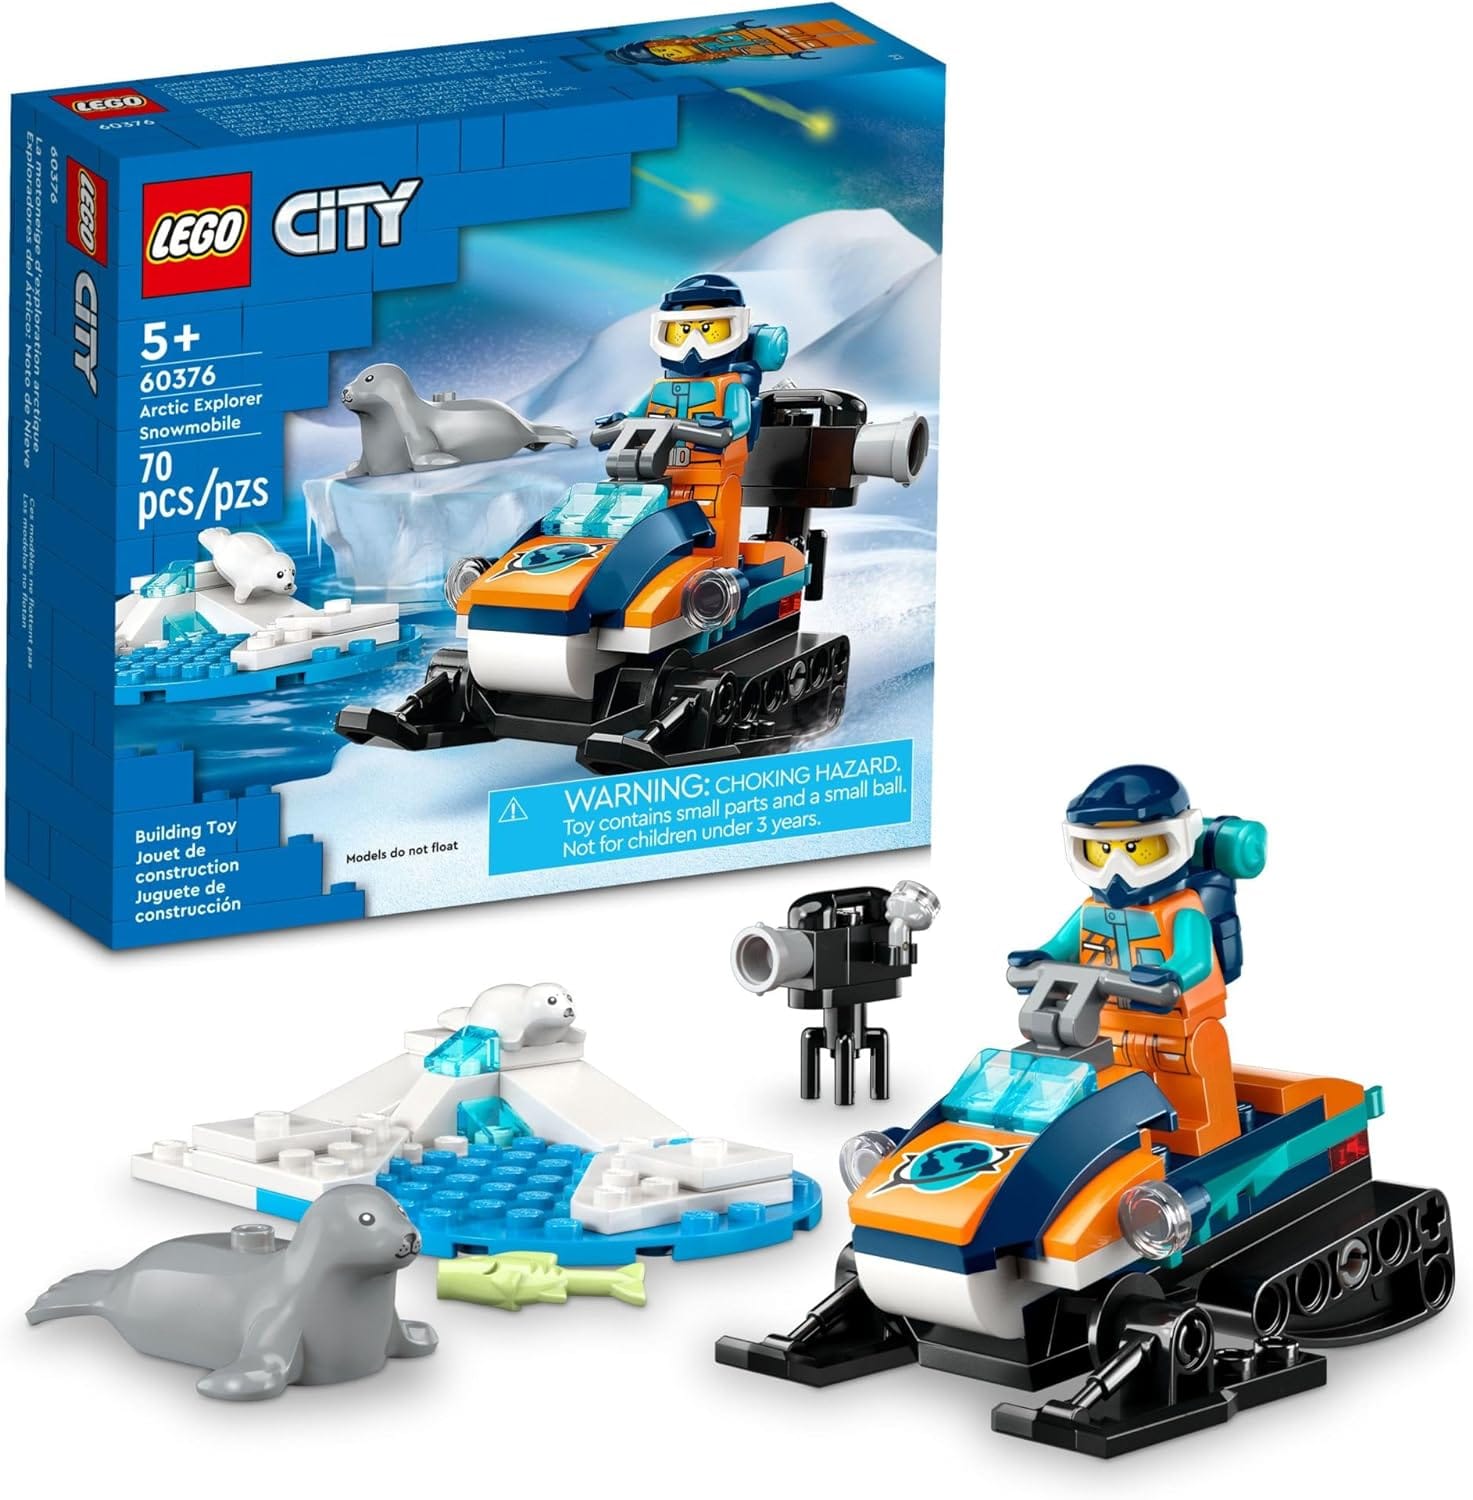 LEGO Arctic Explorer Snowmobile Review